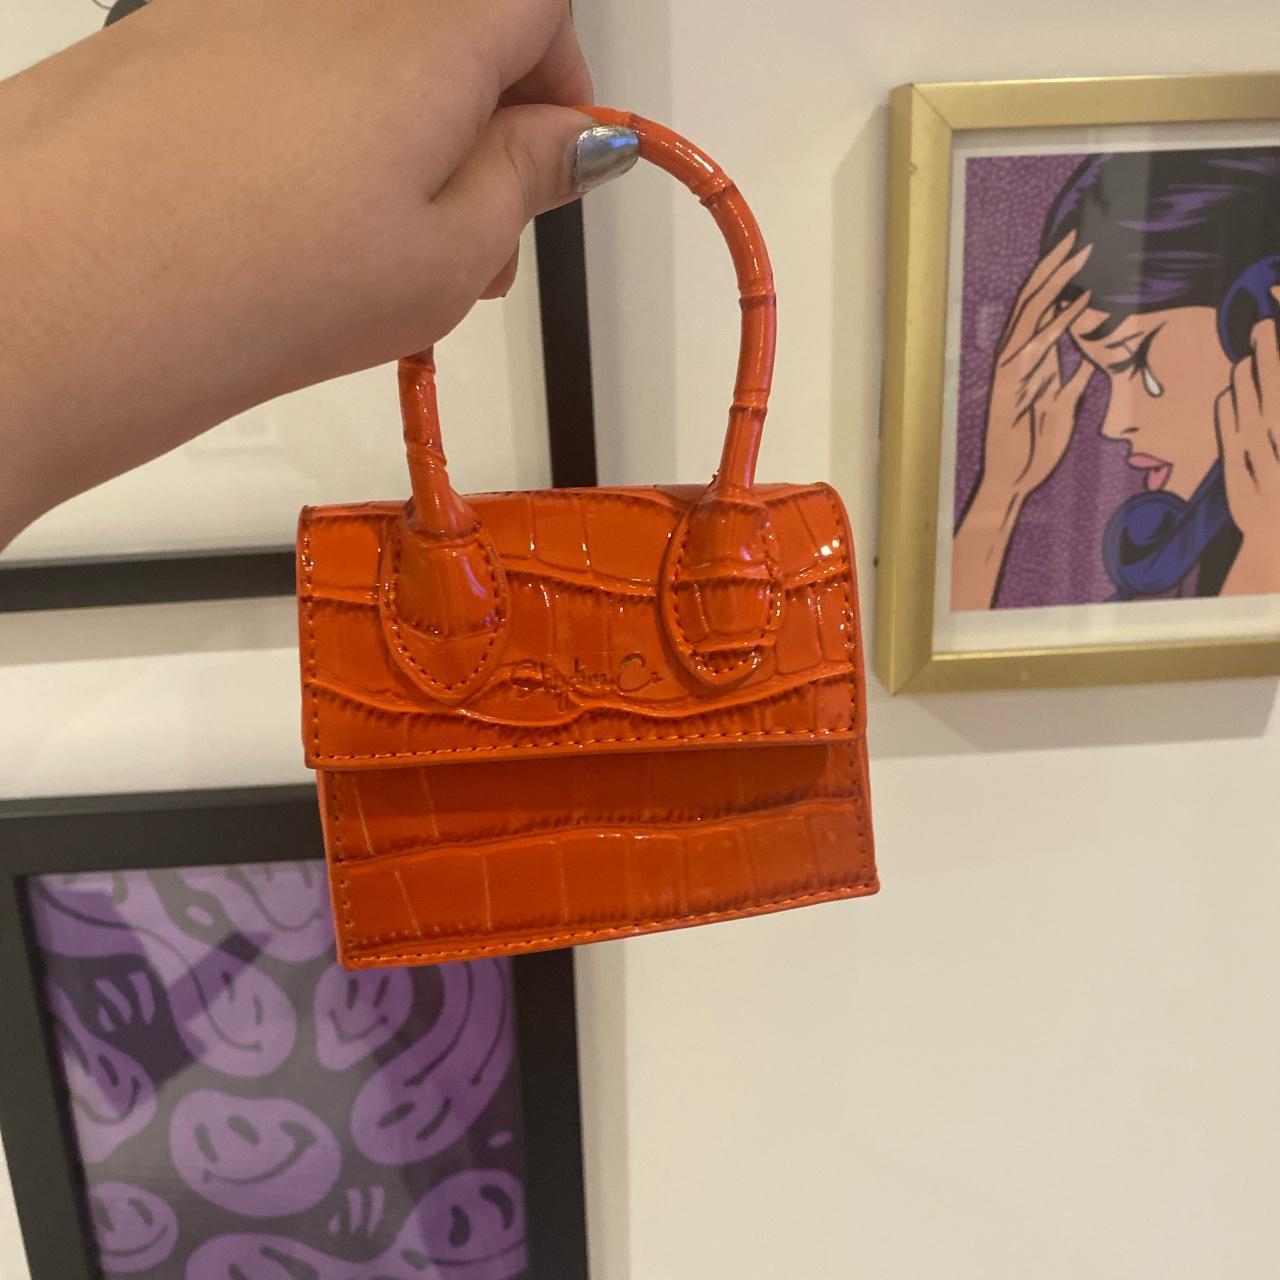 burnt orange purse brand new | eBay